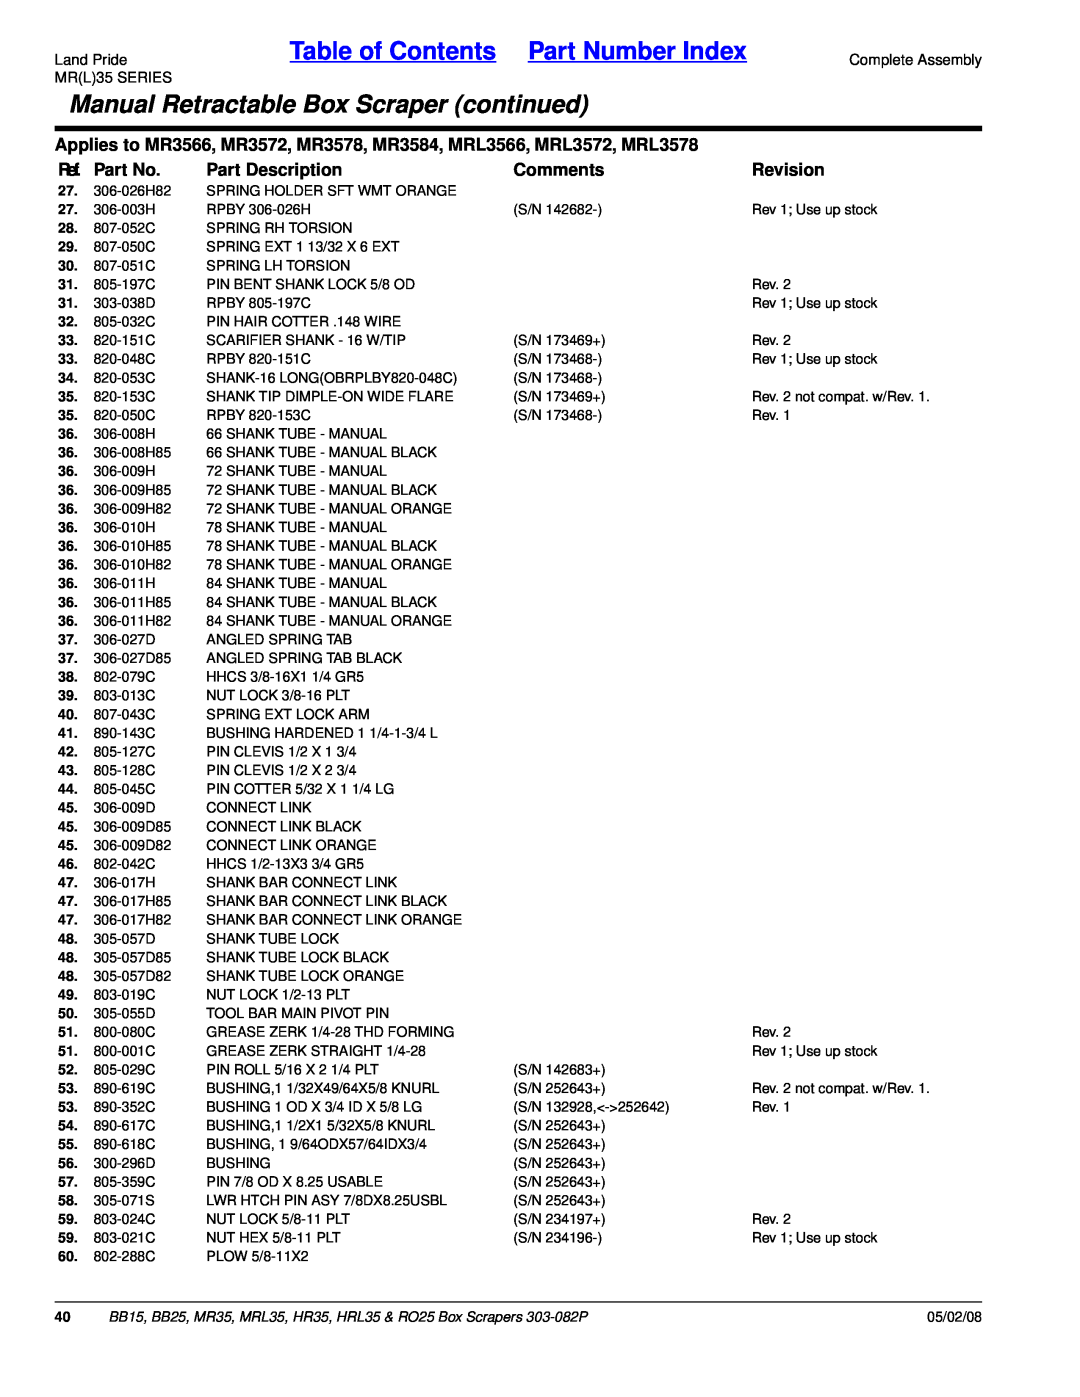 Land Pride MR35 Manual Retractable Box Scraper continued, Table of Contents Part Number Index, Ref. Part No, Comments 